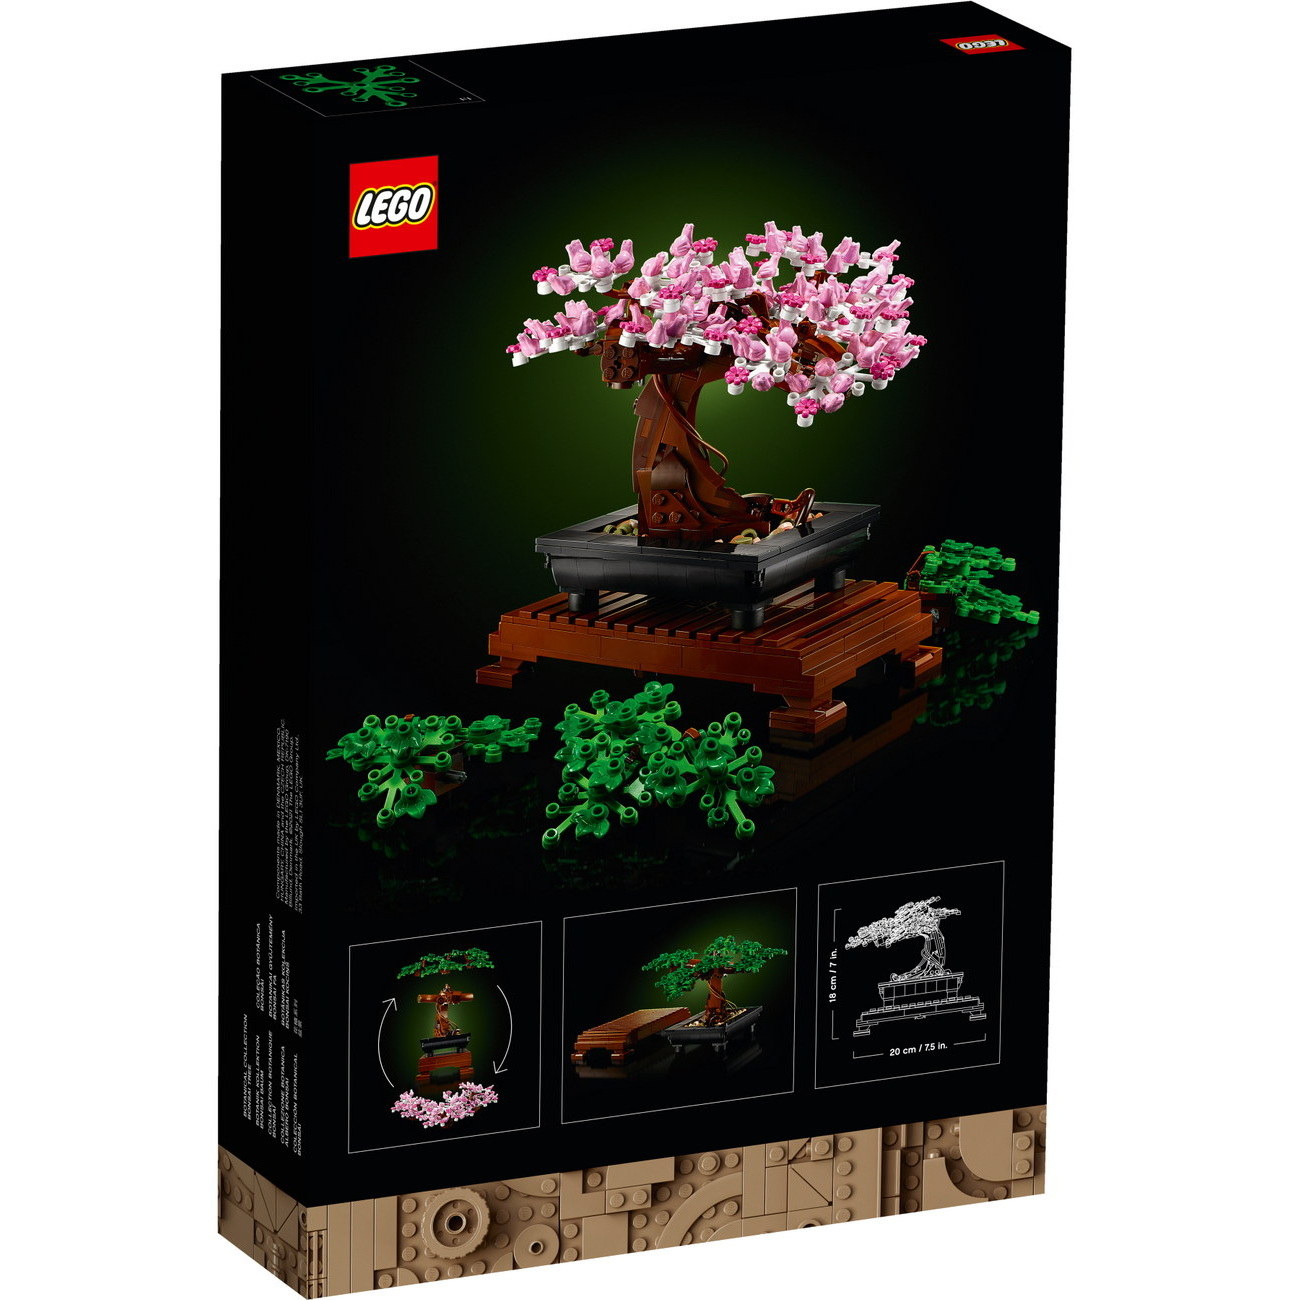 LEGO Creator Expert 10281 - Bonsai Baum